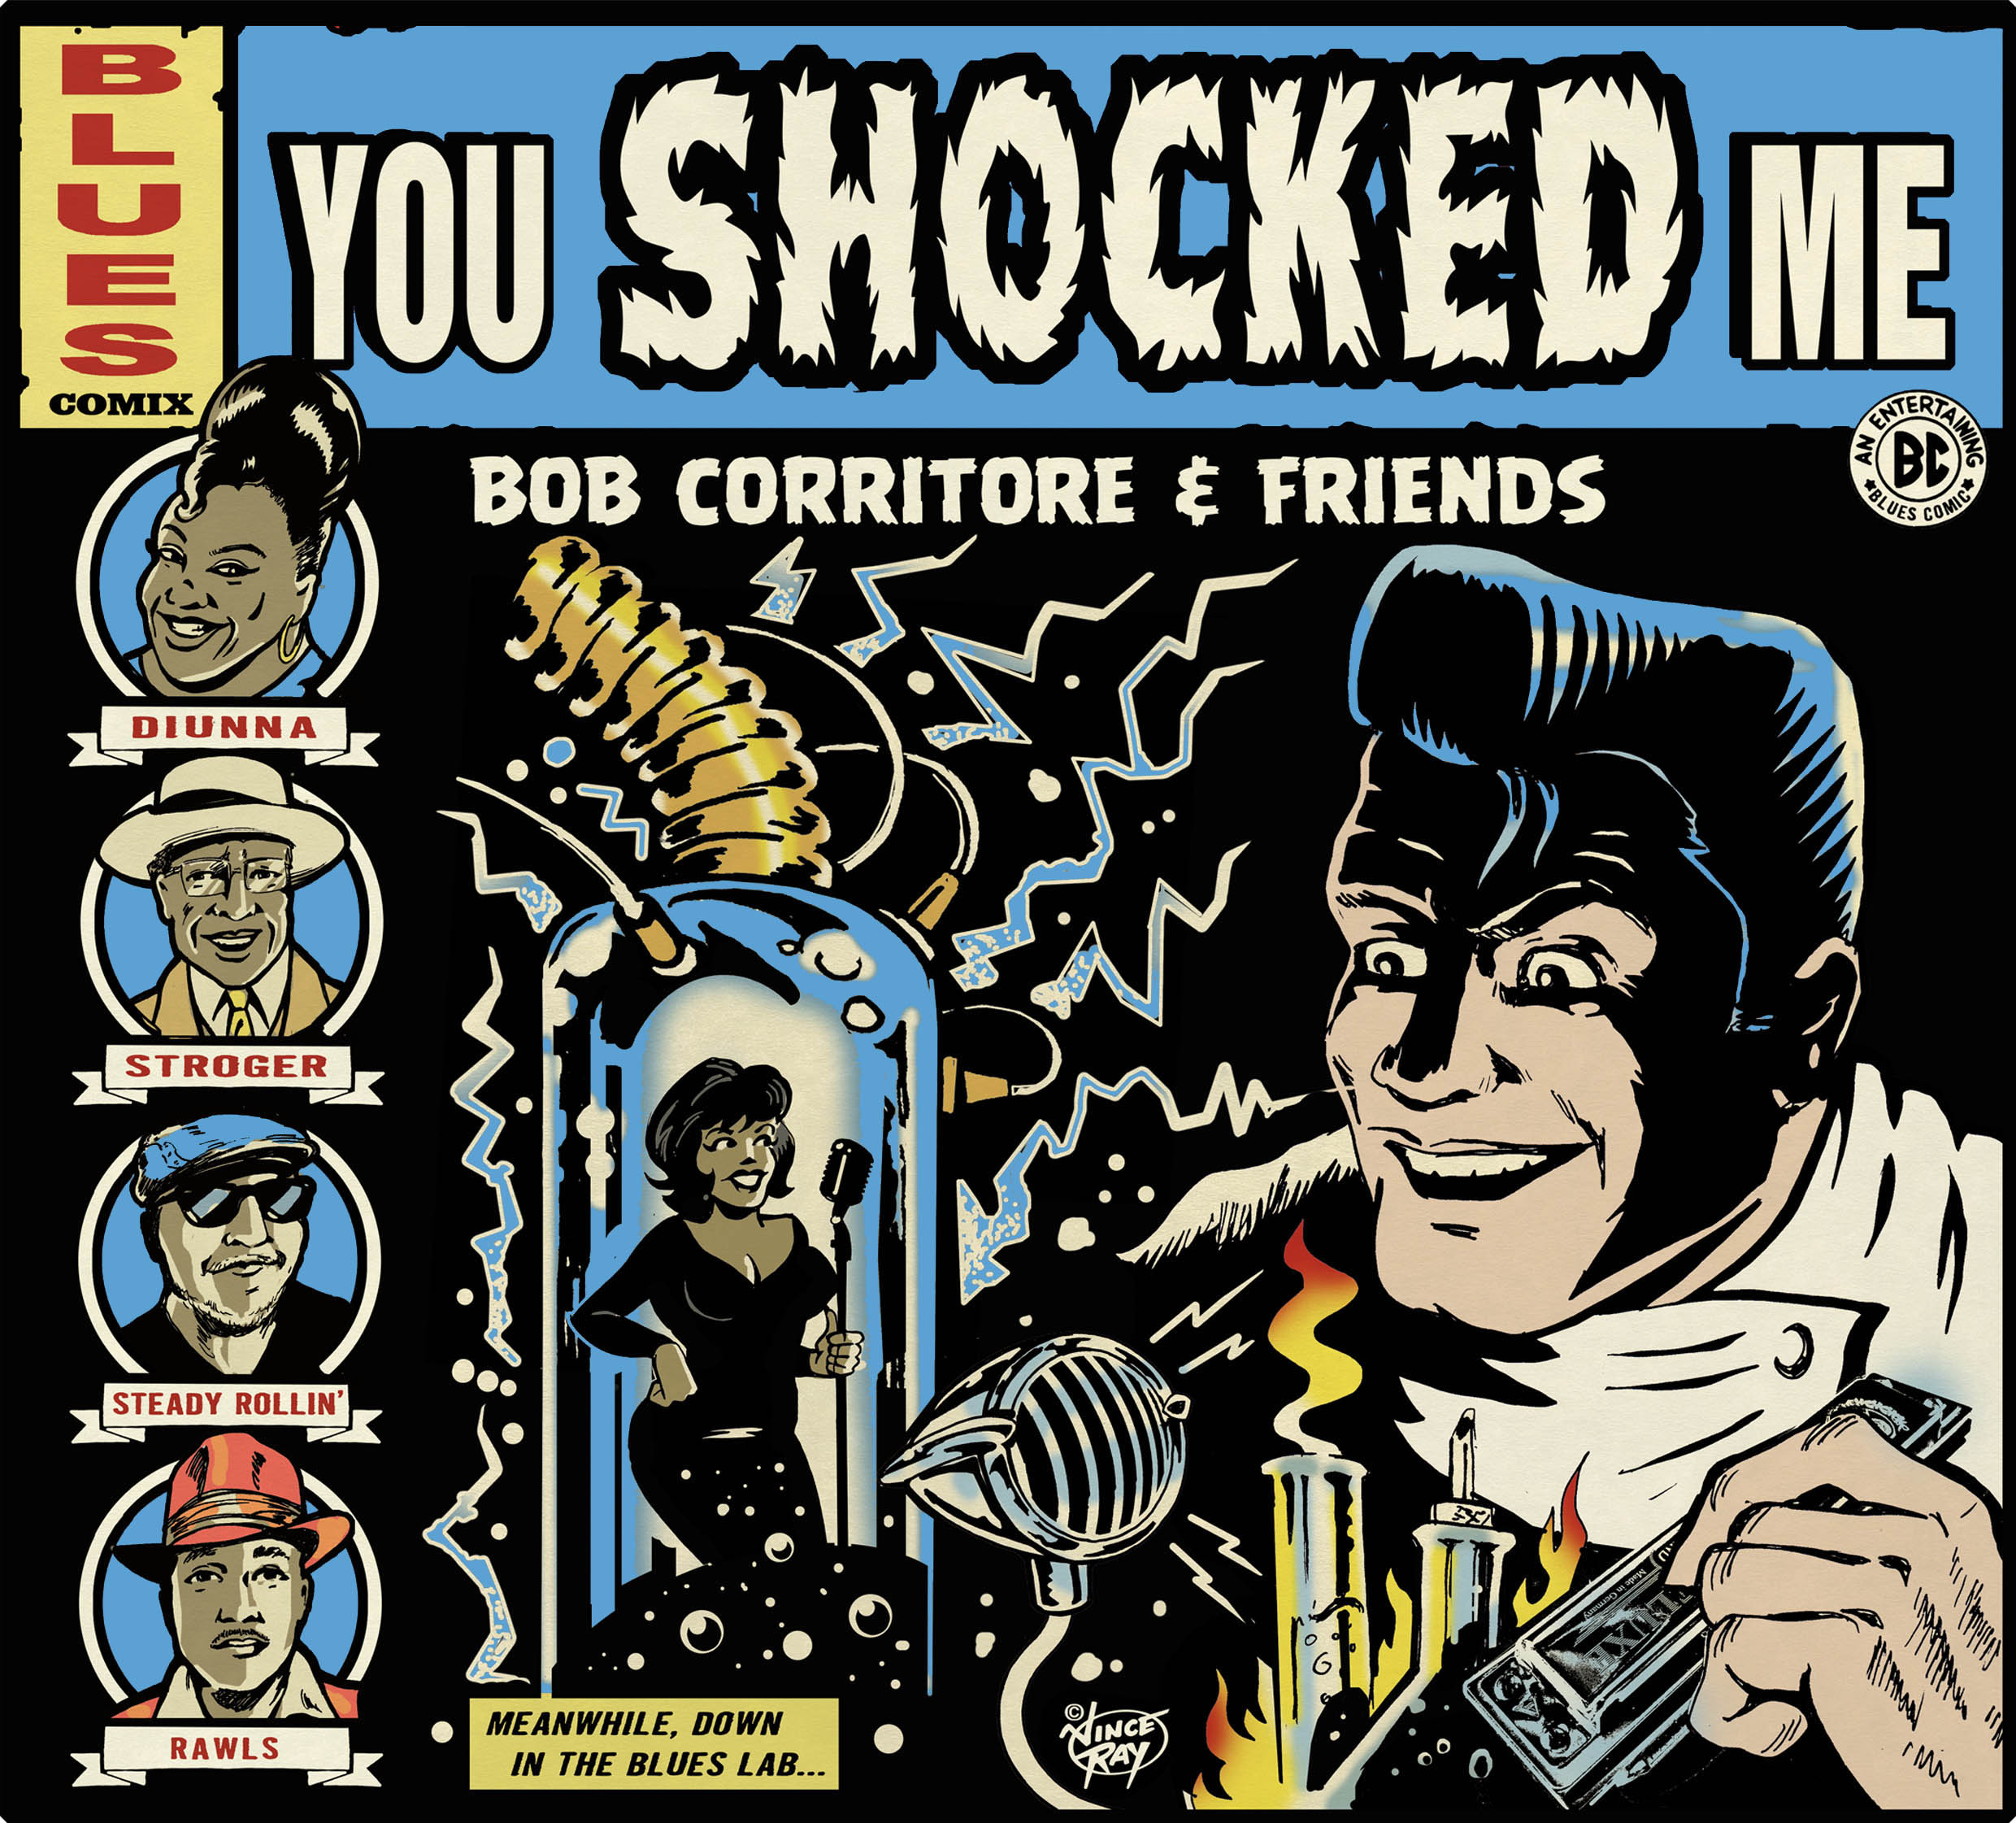 Bob Corritore & Friends - You Shocked Me